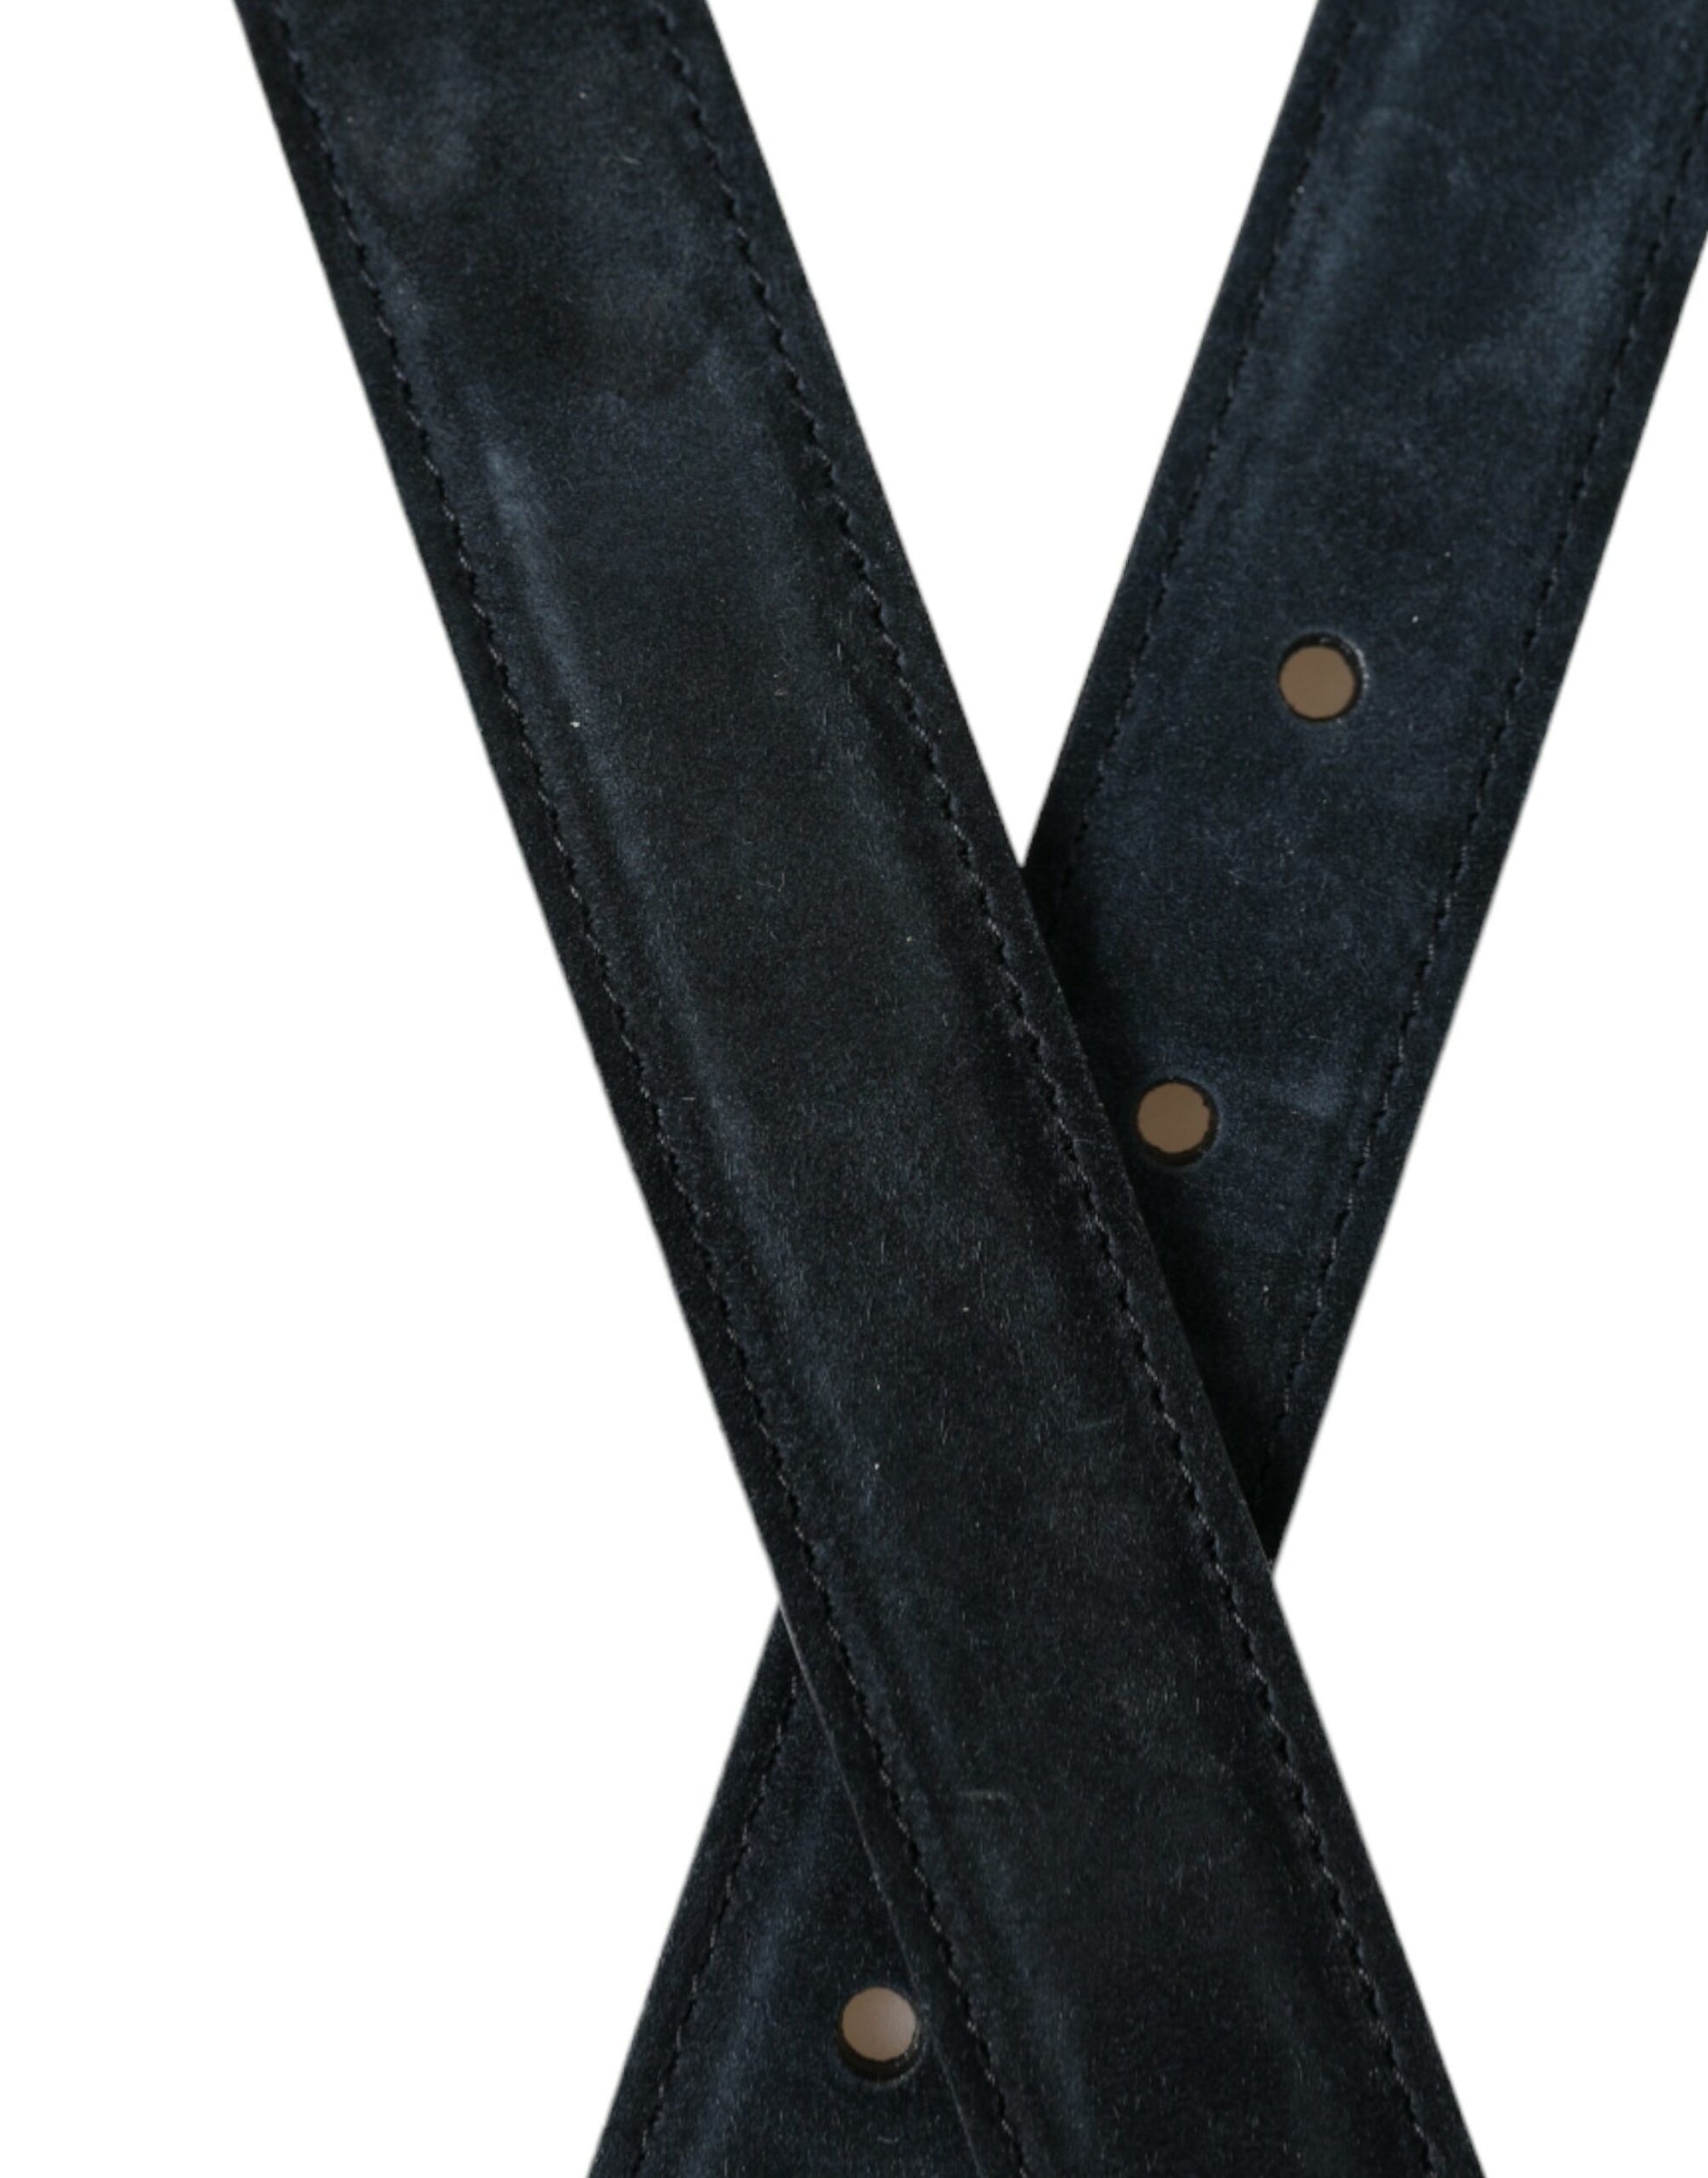 Elegant Blue Leather Belt with Metal Buckle